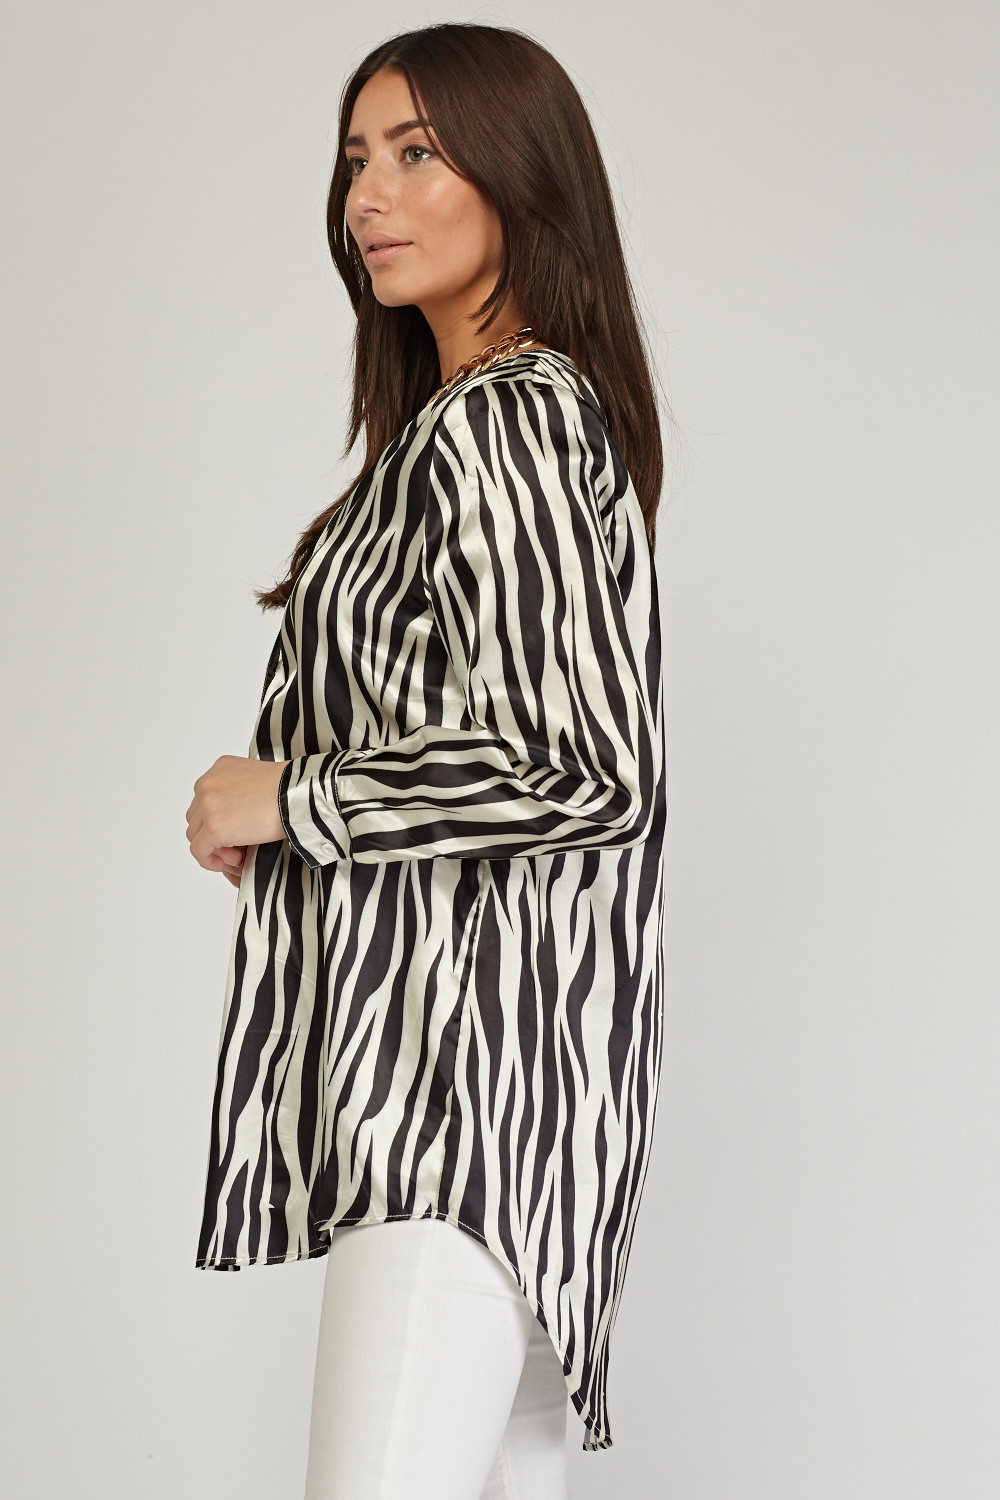 Zebra Print Oversized Blouse - Just £5